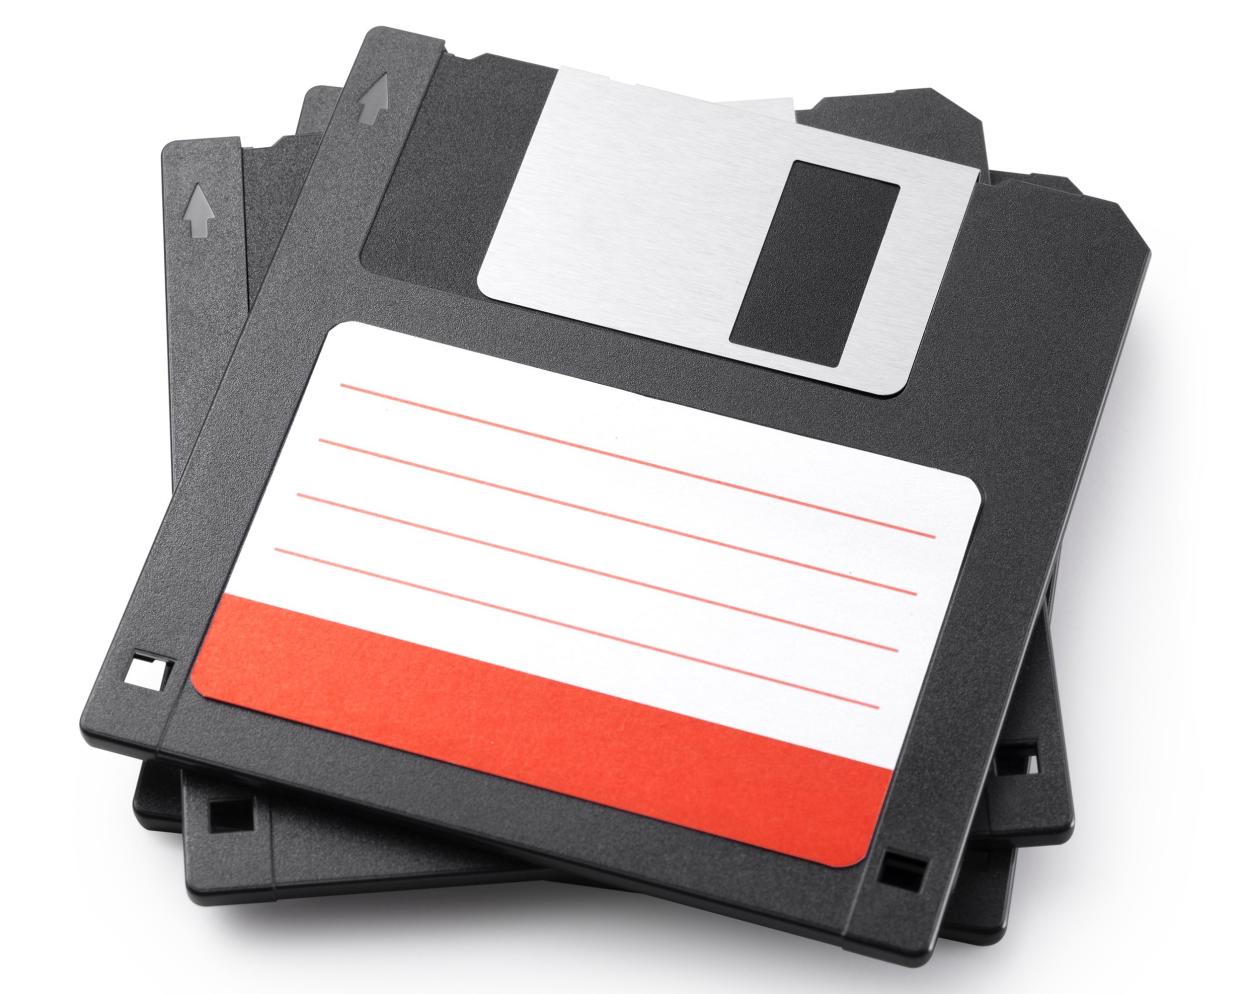 stack of floppy disks